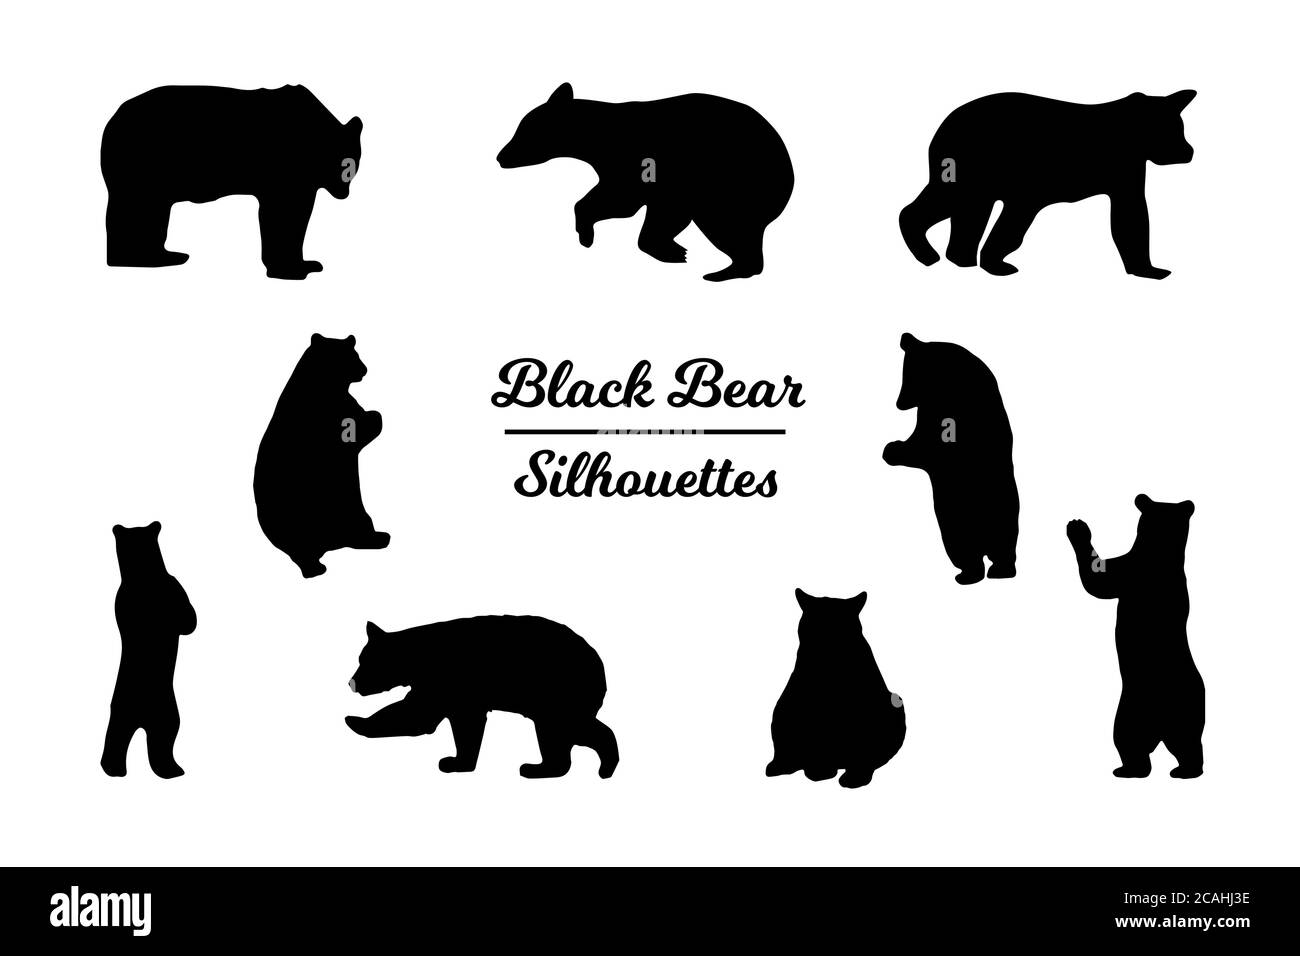 Black bear animal silhouettes. Stock Vector